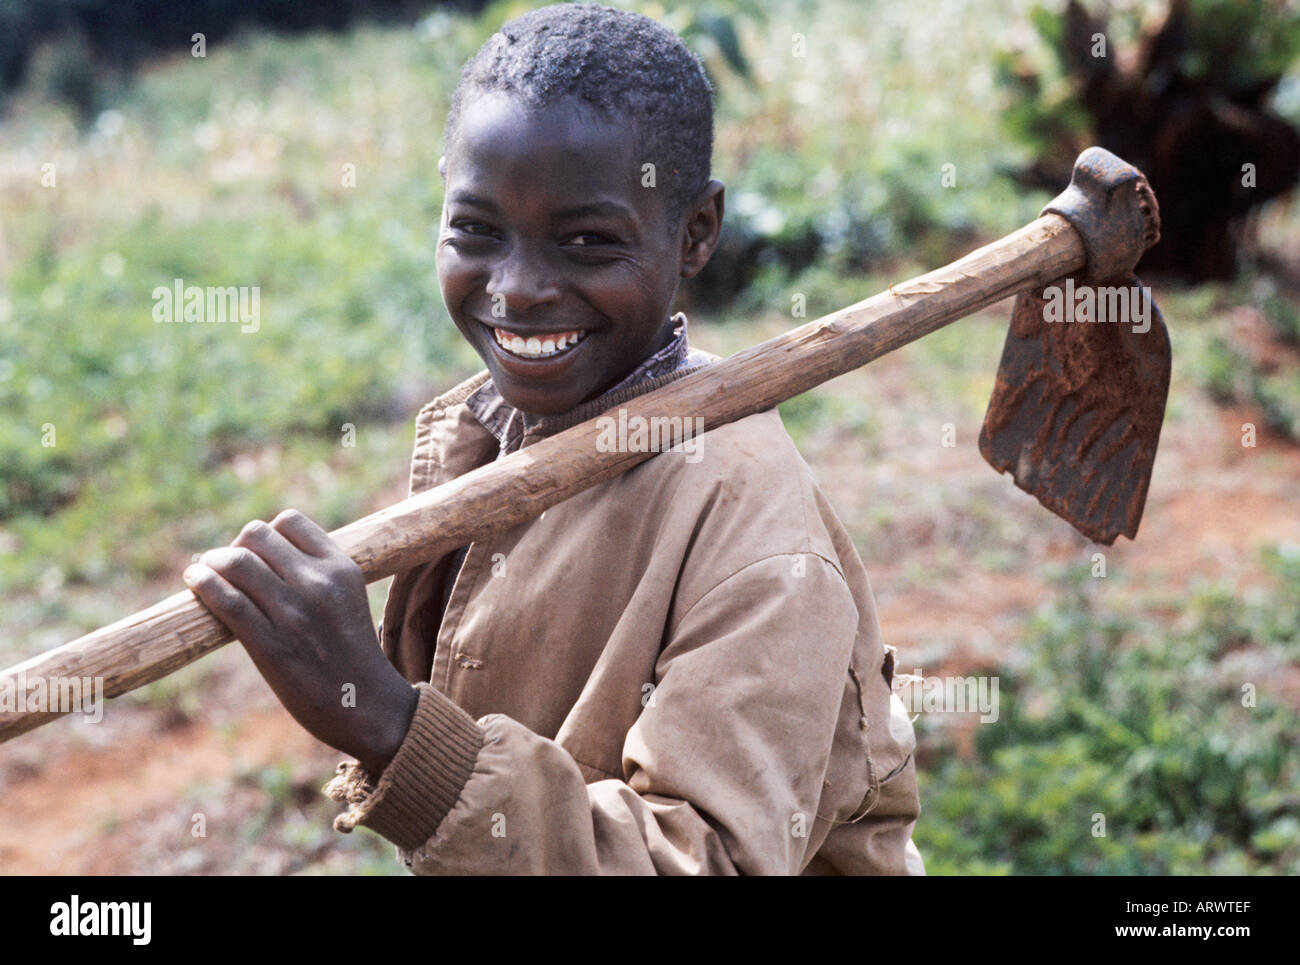 A brighteyed boy from a Kikuyu rural family near Nairobi, Kenya, ready with his hoe to work on the family farm Stock Photo